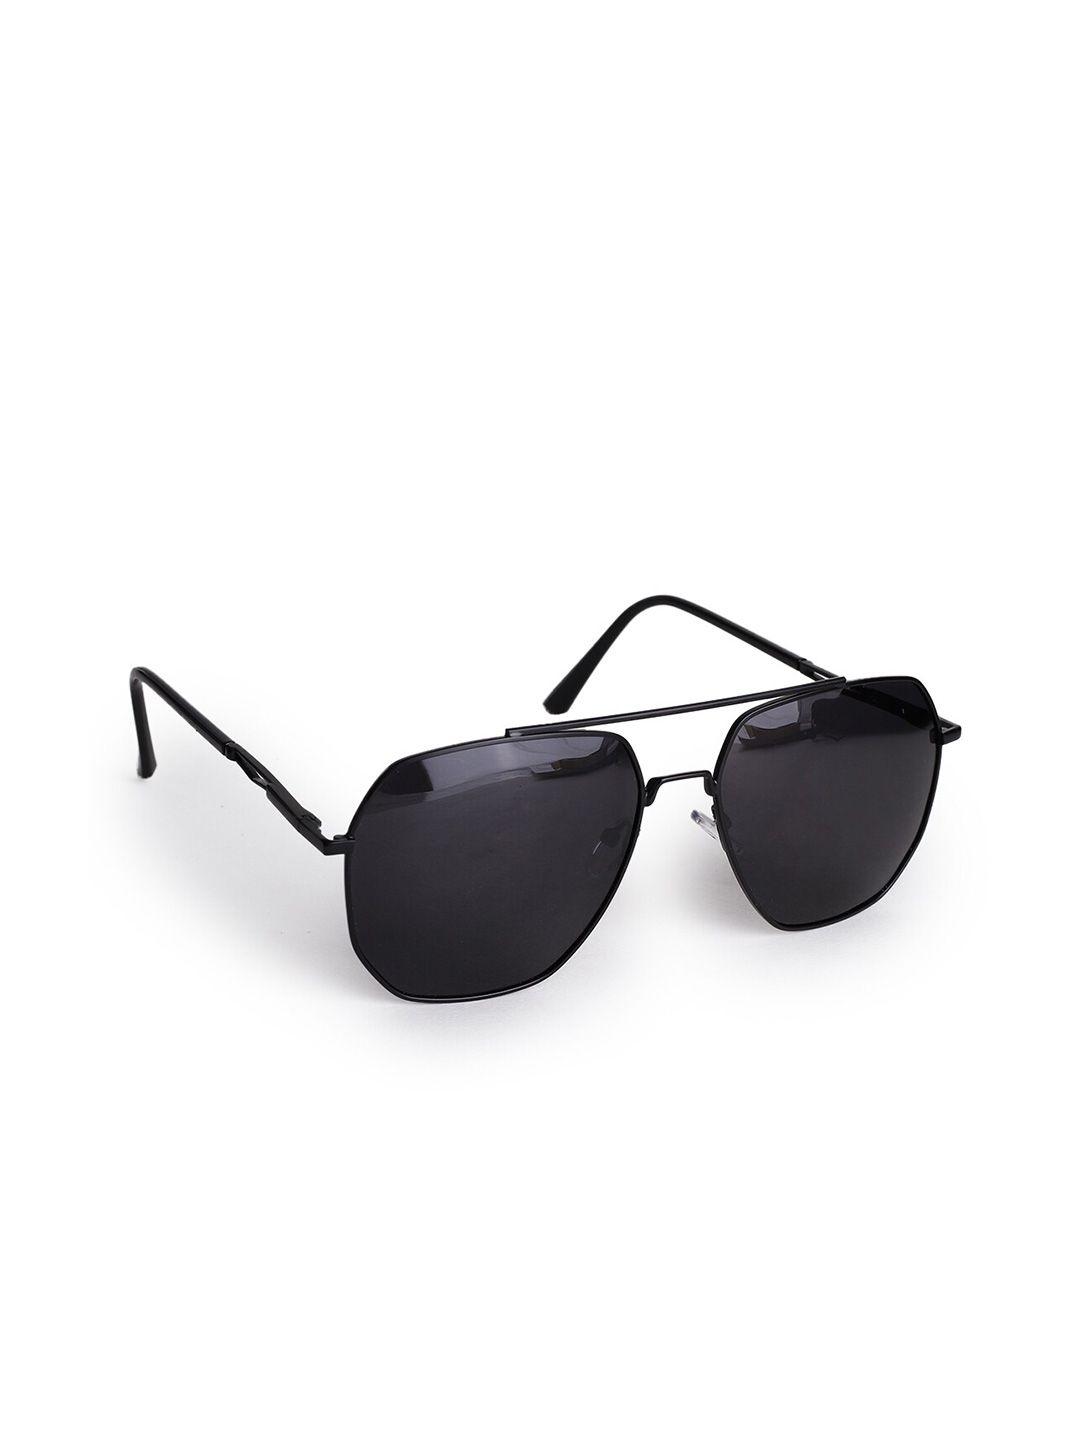 hashburys unisex square sunglasses with uv protected lens